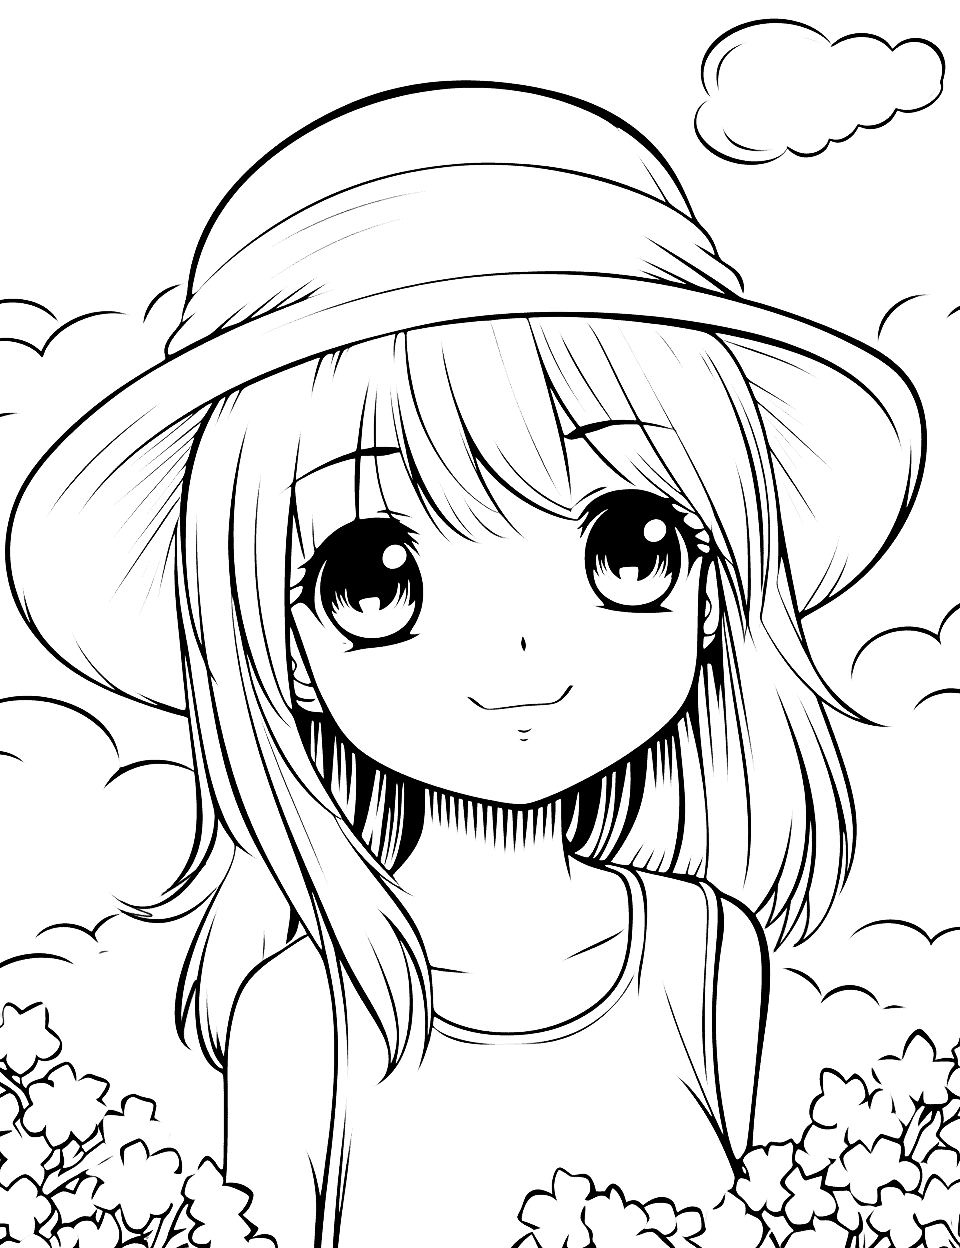 Anime Girl's Sweet Summer Kawaii Coloring Page - An Anime girl enjoying a sweet summer.